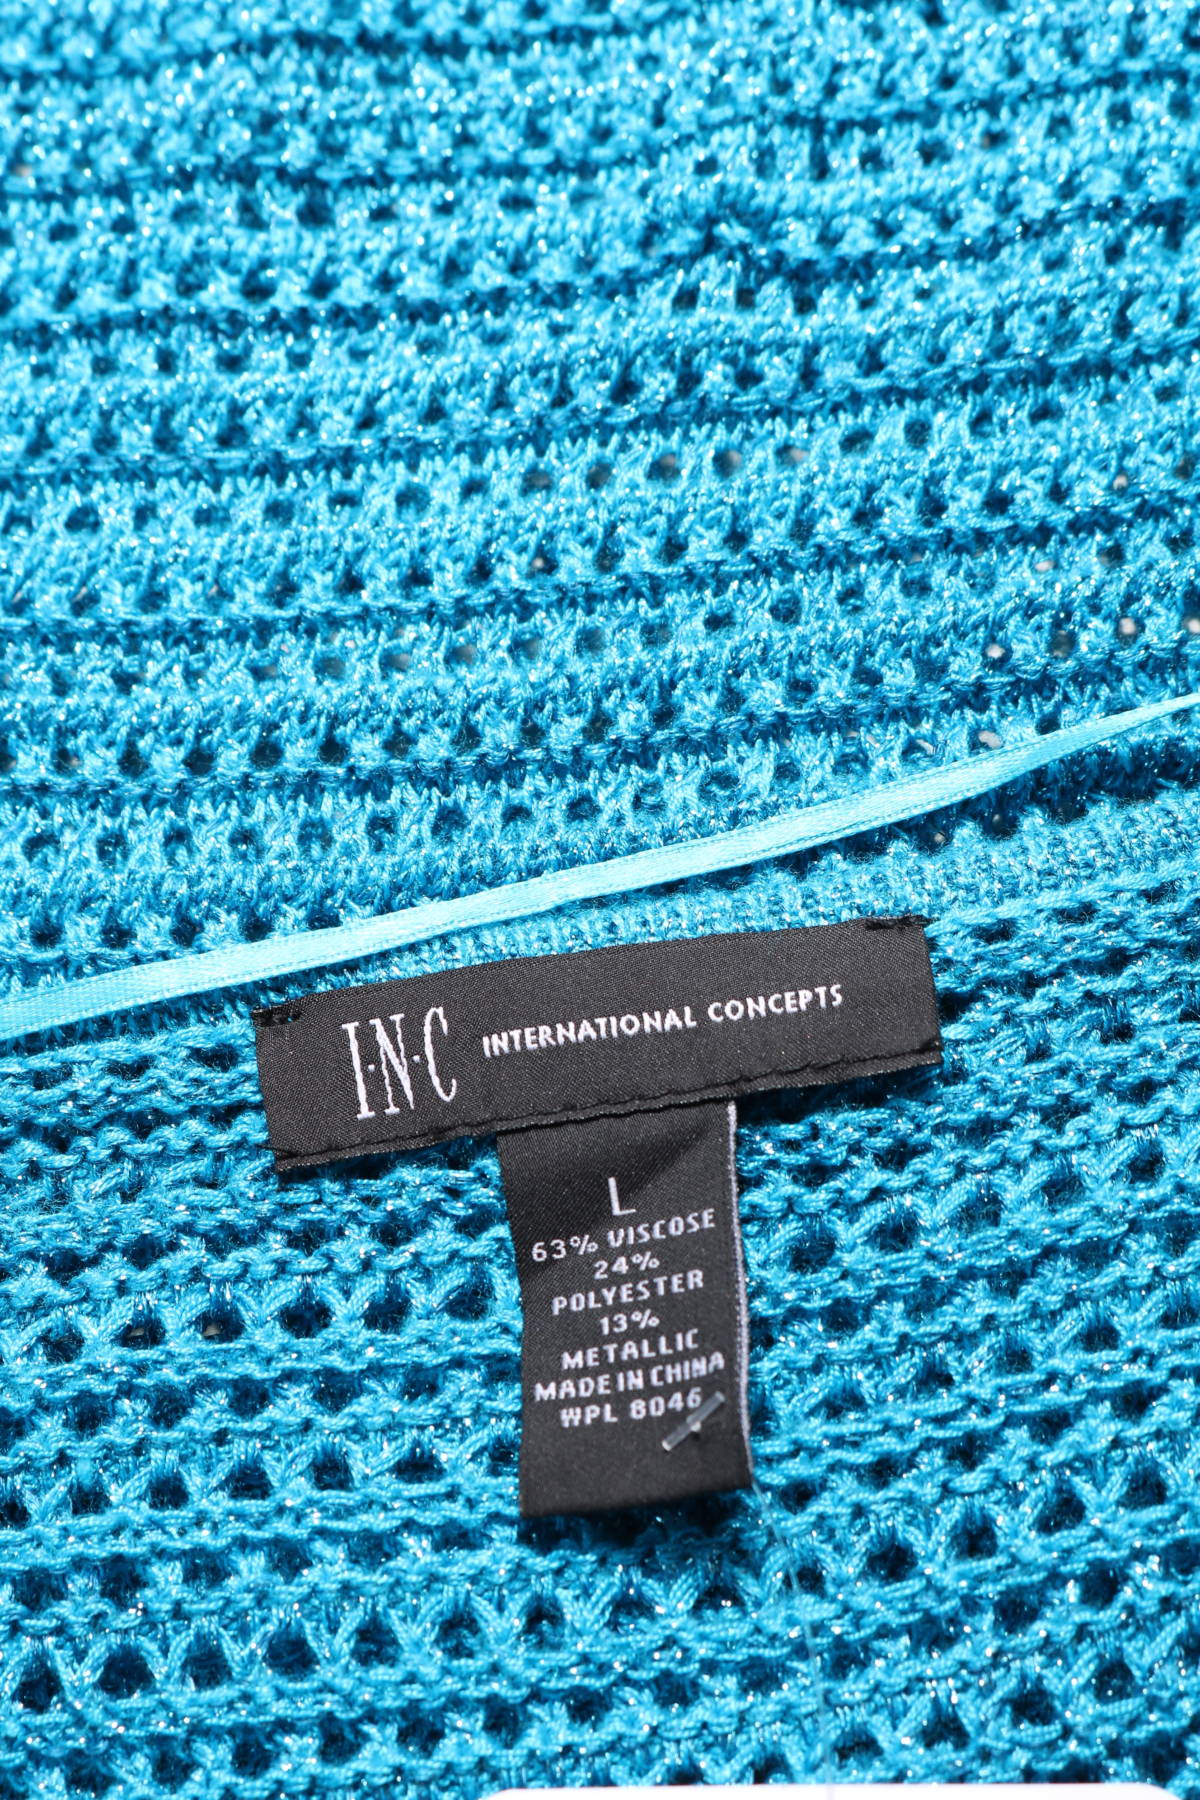 Пуловер I.N.C - INTERNATIONAL CONCEPTS3